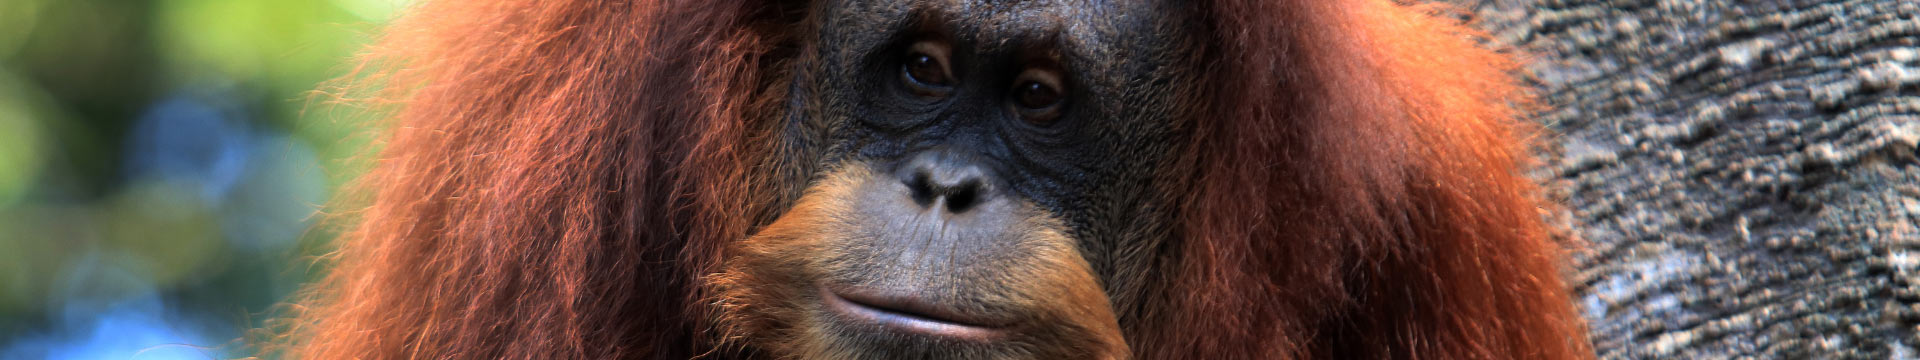 Commitment to Orangutan Conservation